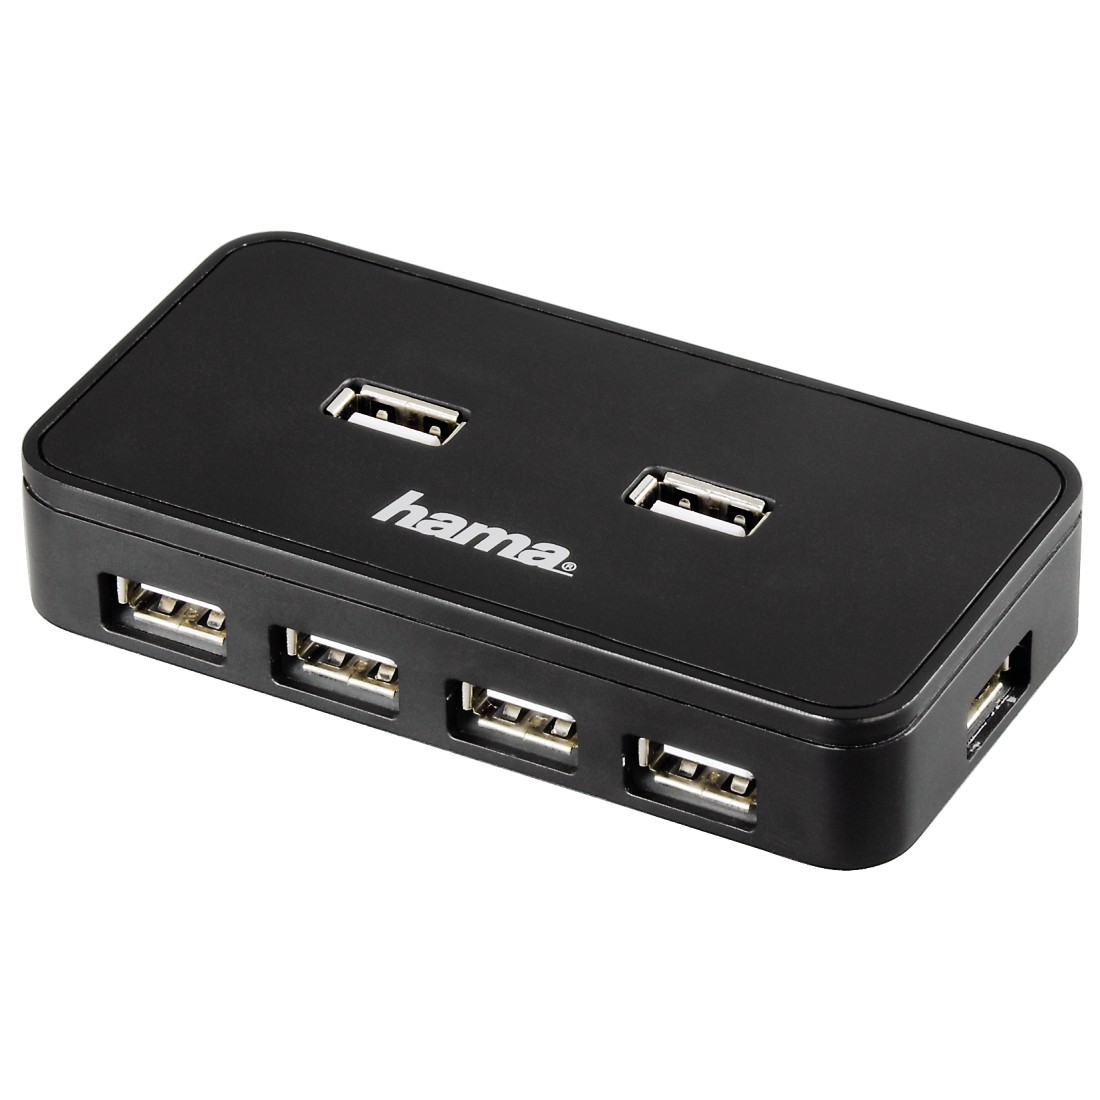 00039859 Hama USB 2.0 Hub 1:7, with power supply, black, cardboard box |  hama.com